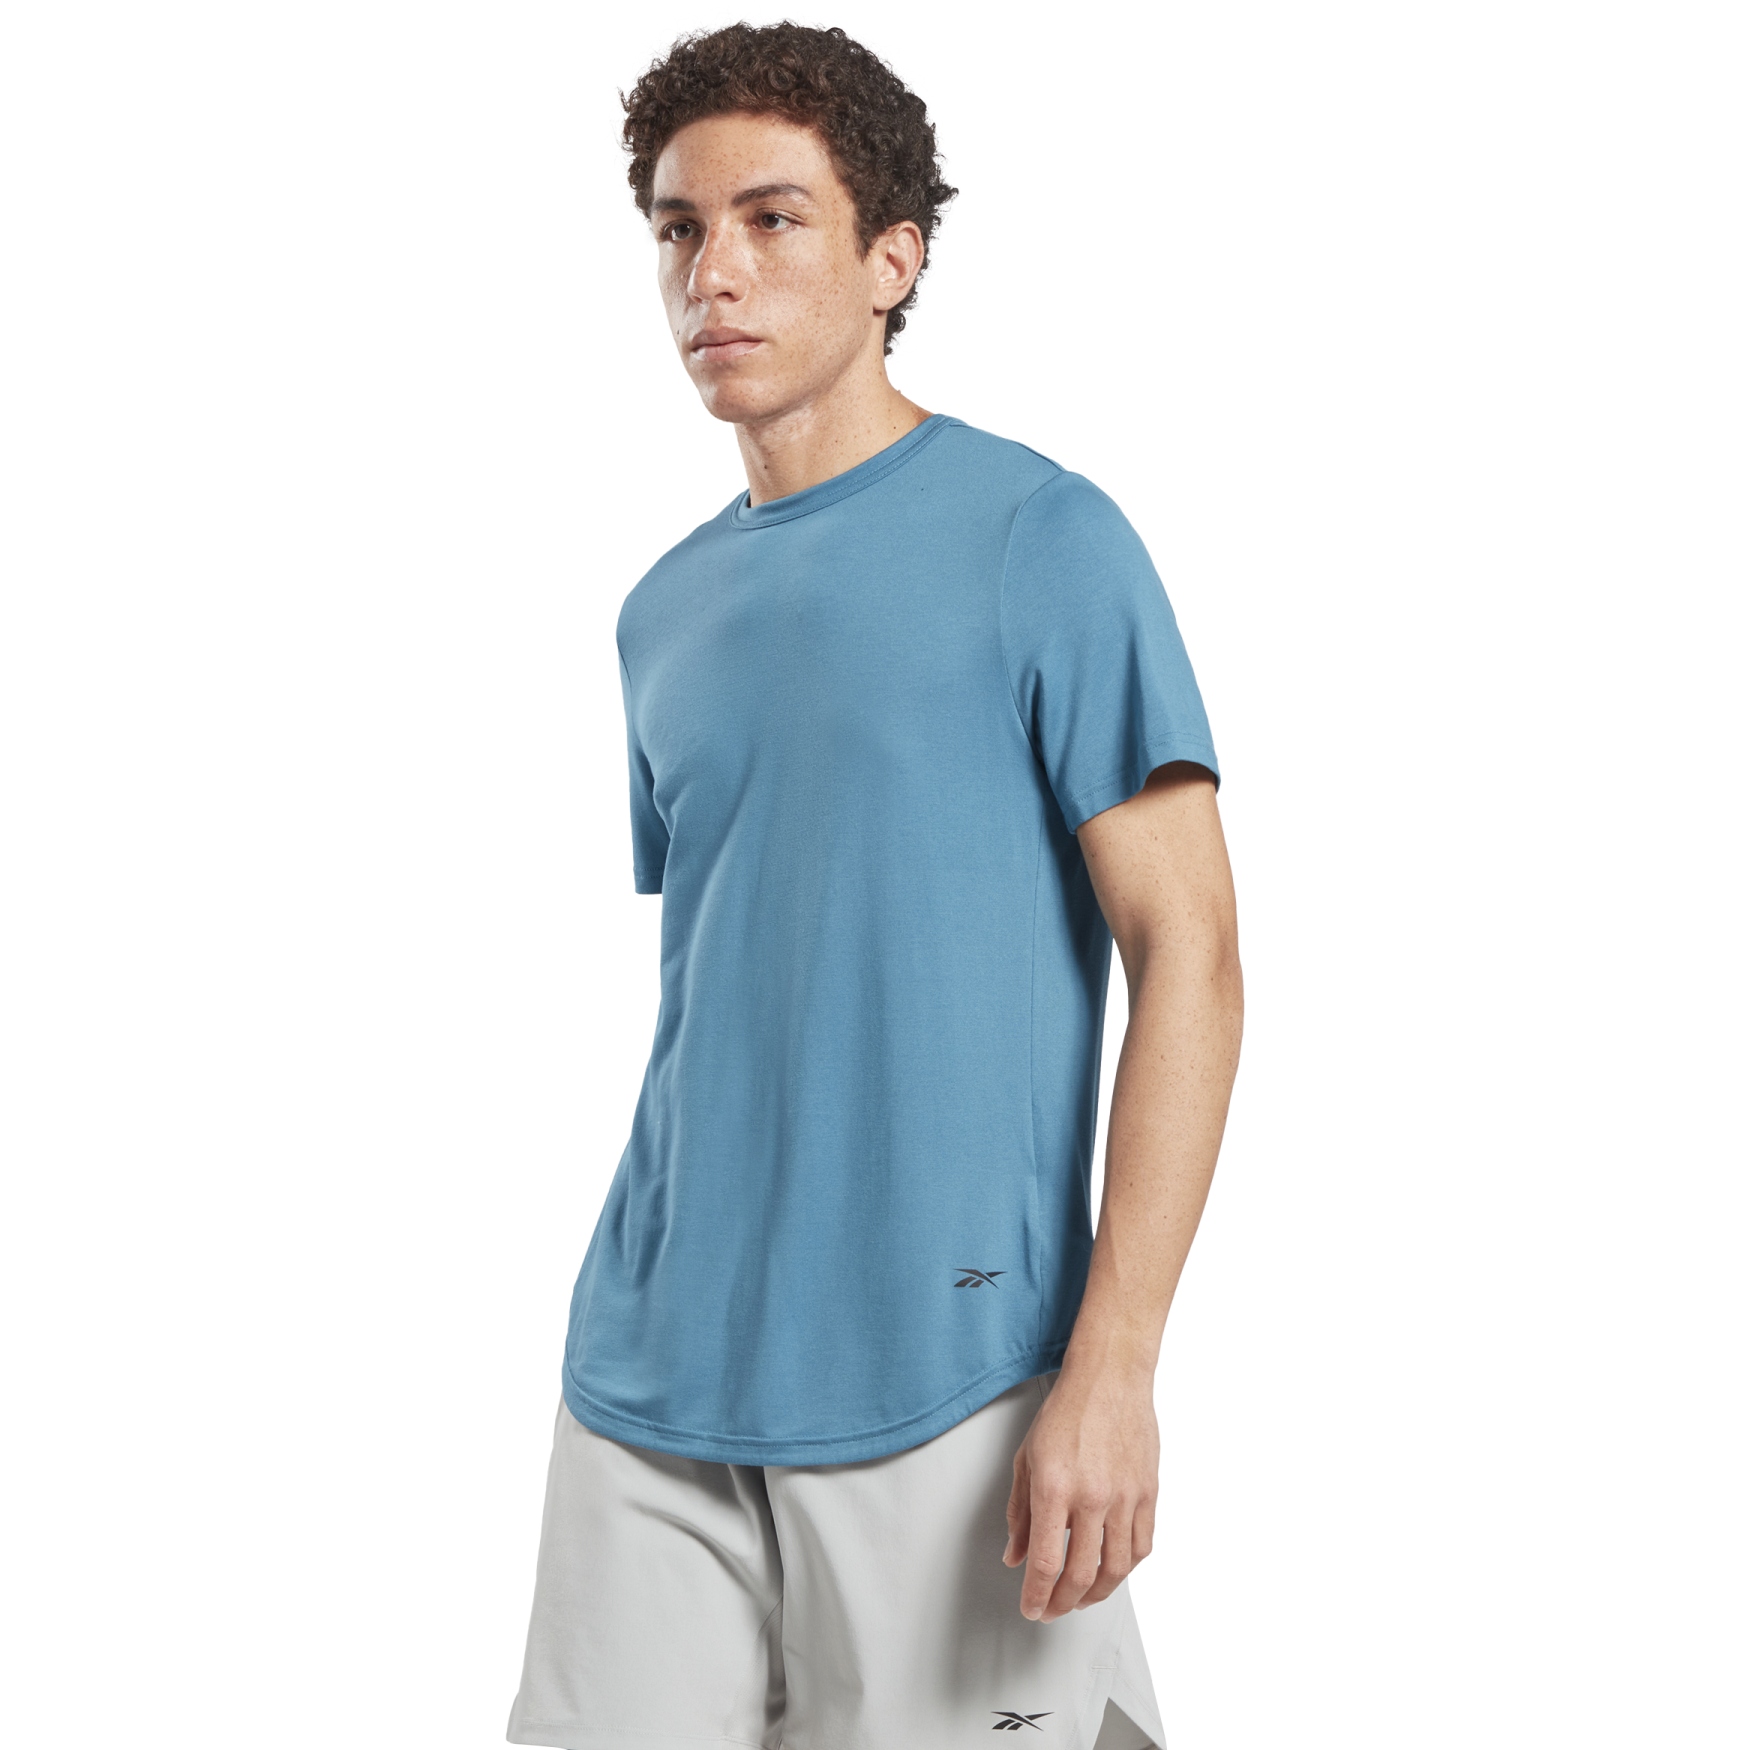 Productfoto van Reebok TS ACTIVCHILL Dreamblend Shirt Heren - steely blue